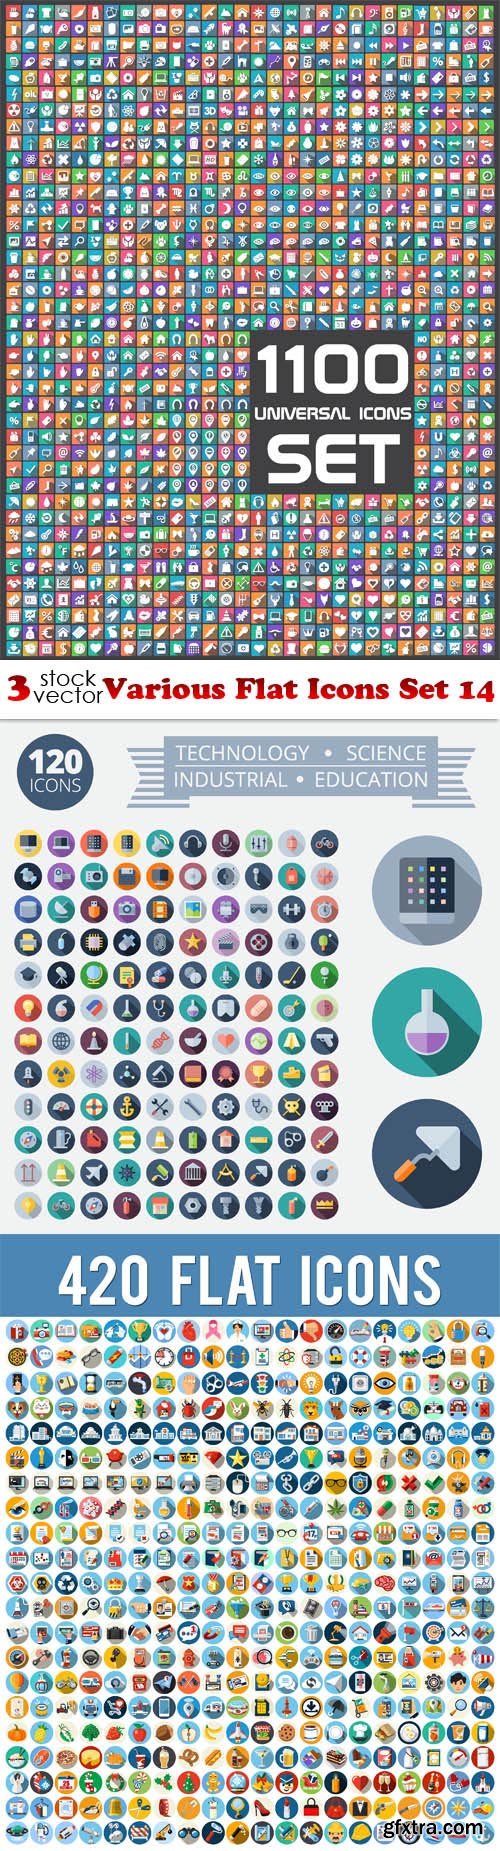 Vectors - Various Flat Icons Set 14